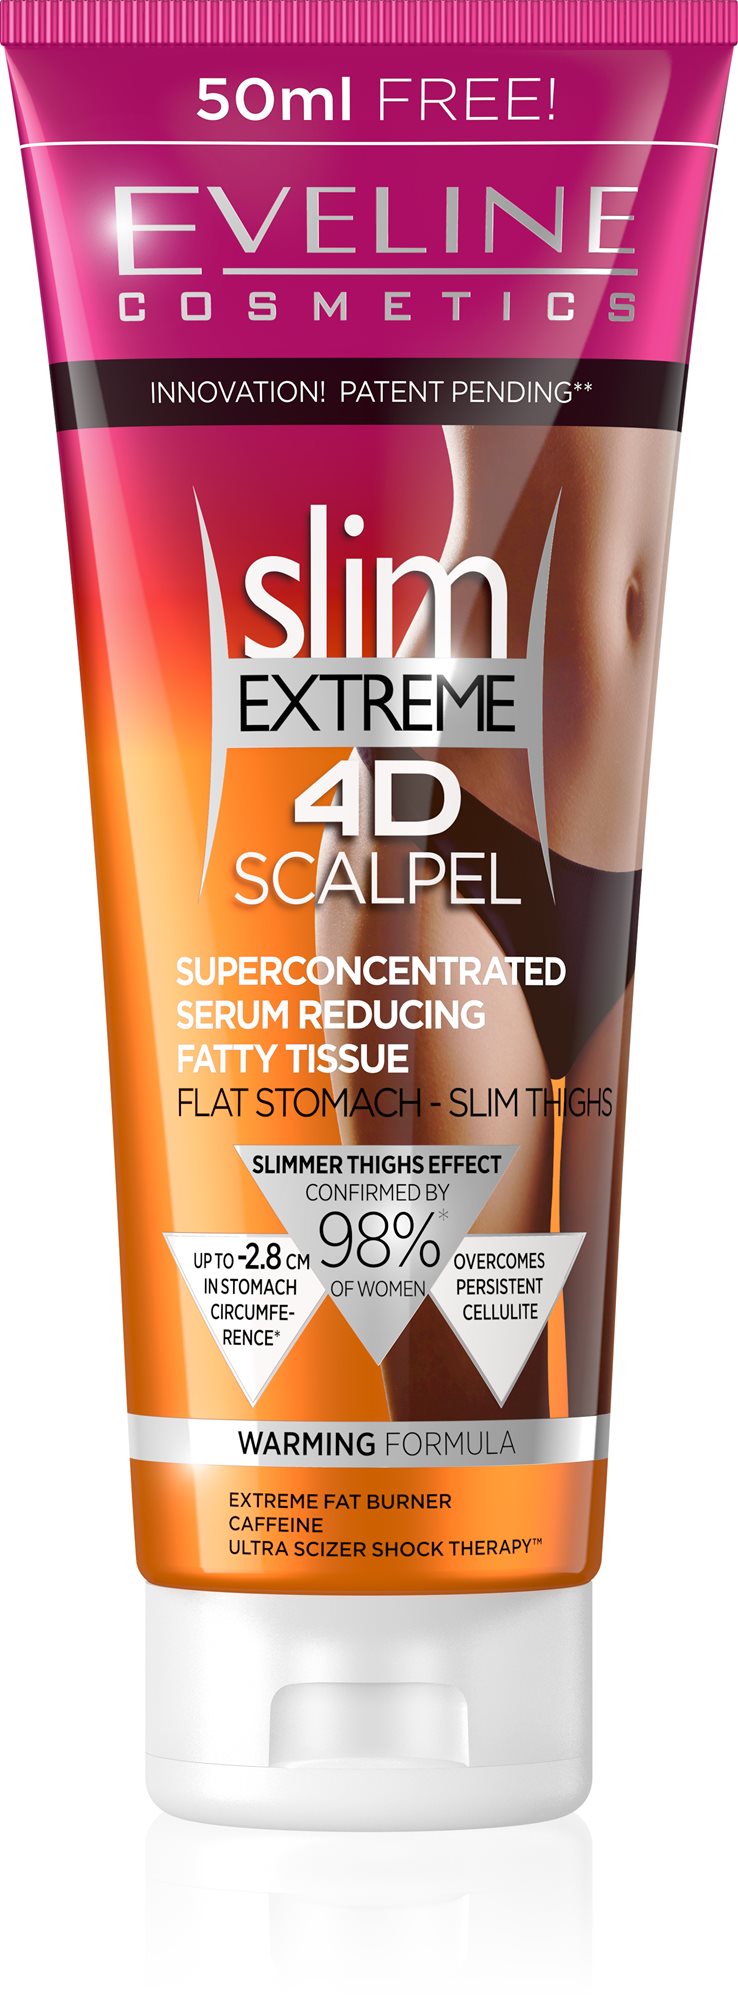 Testszérum EVELINE COSMETICS Slim Extreme 4D Scalpel Superconcentrated Serum Reducing Fatty Tissue 250 ml